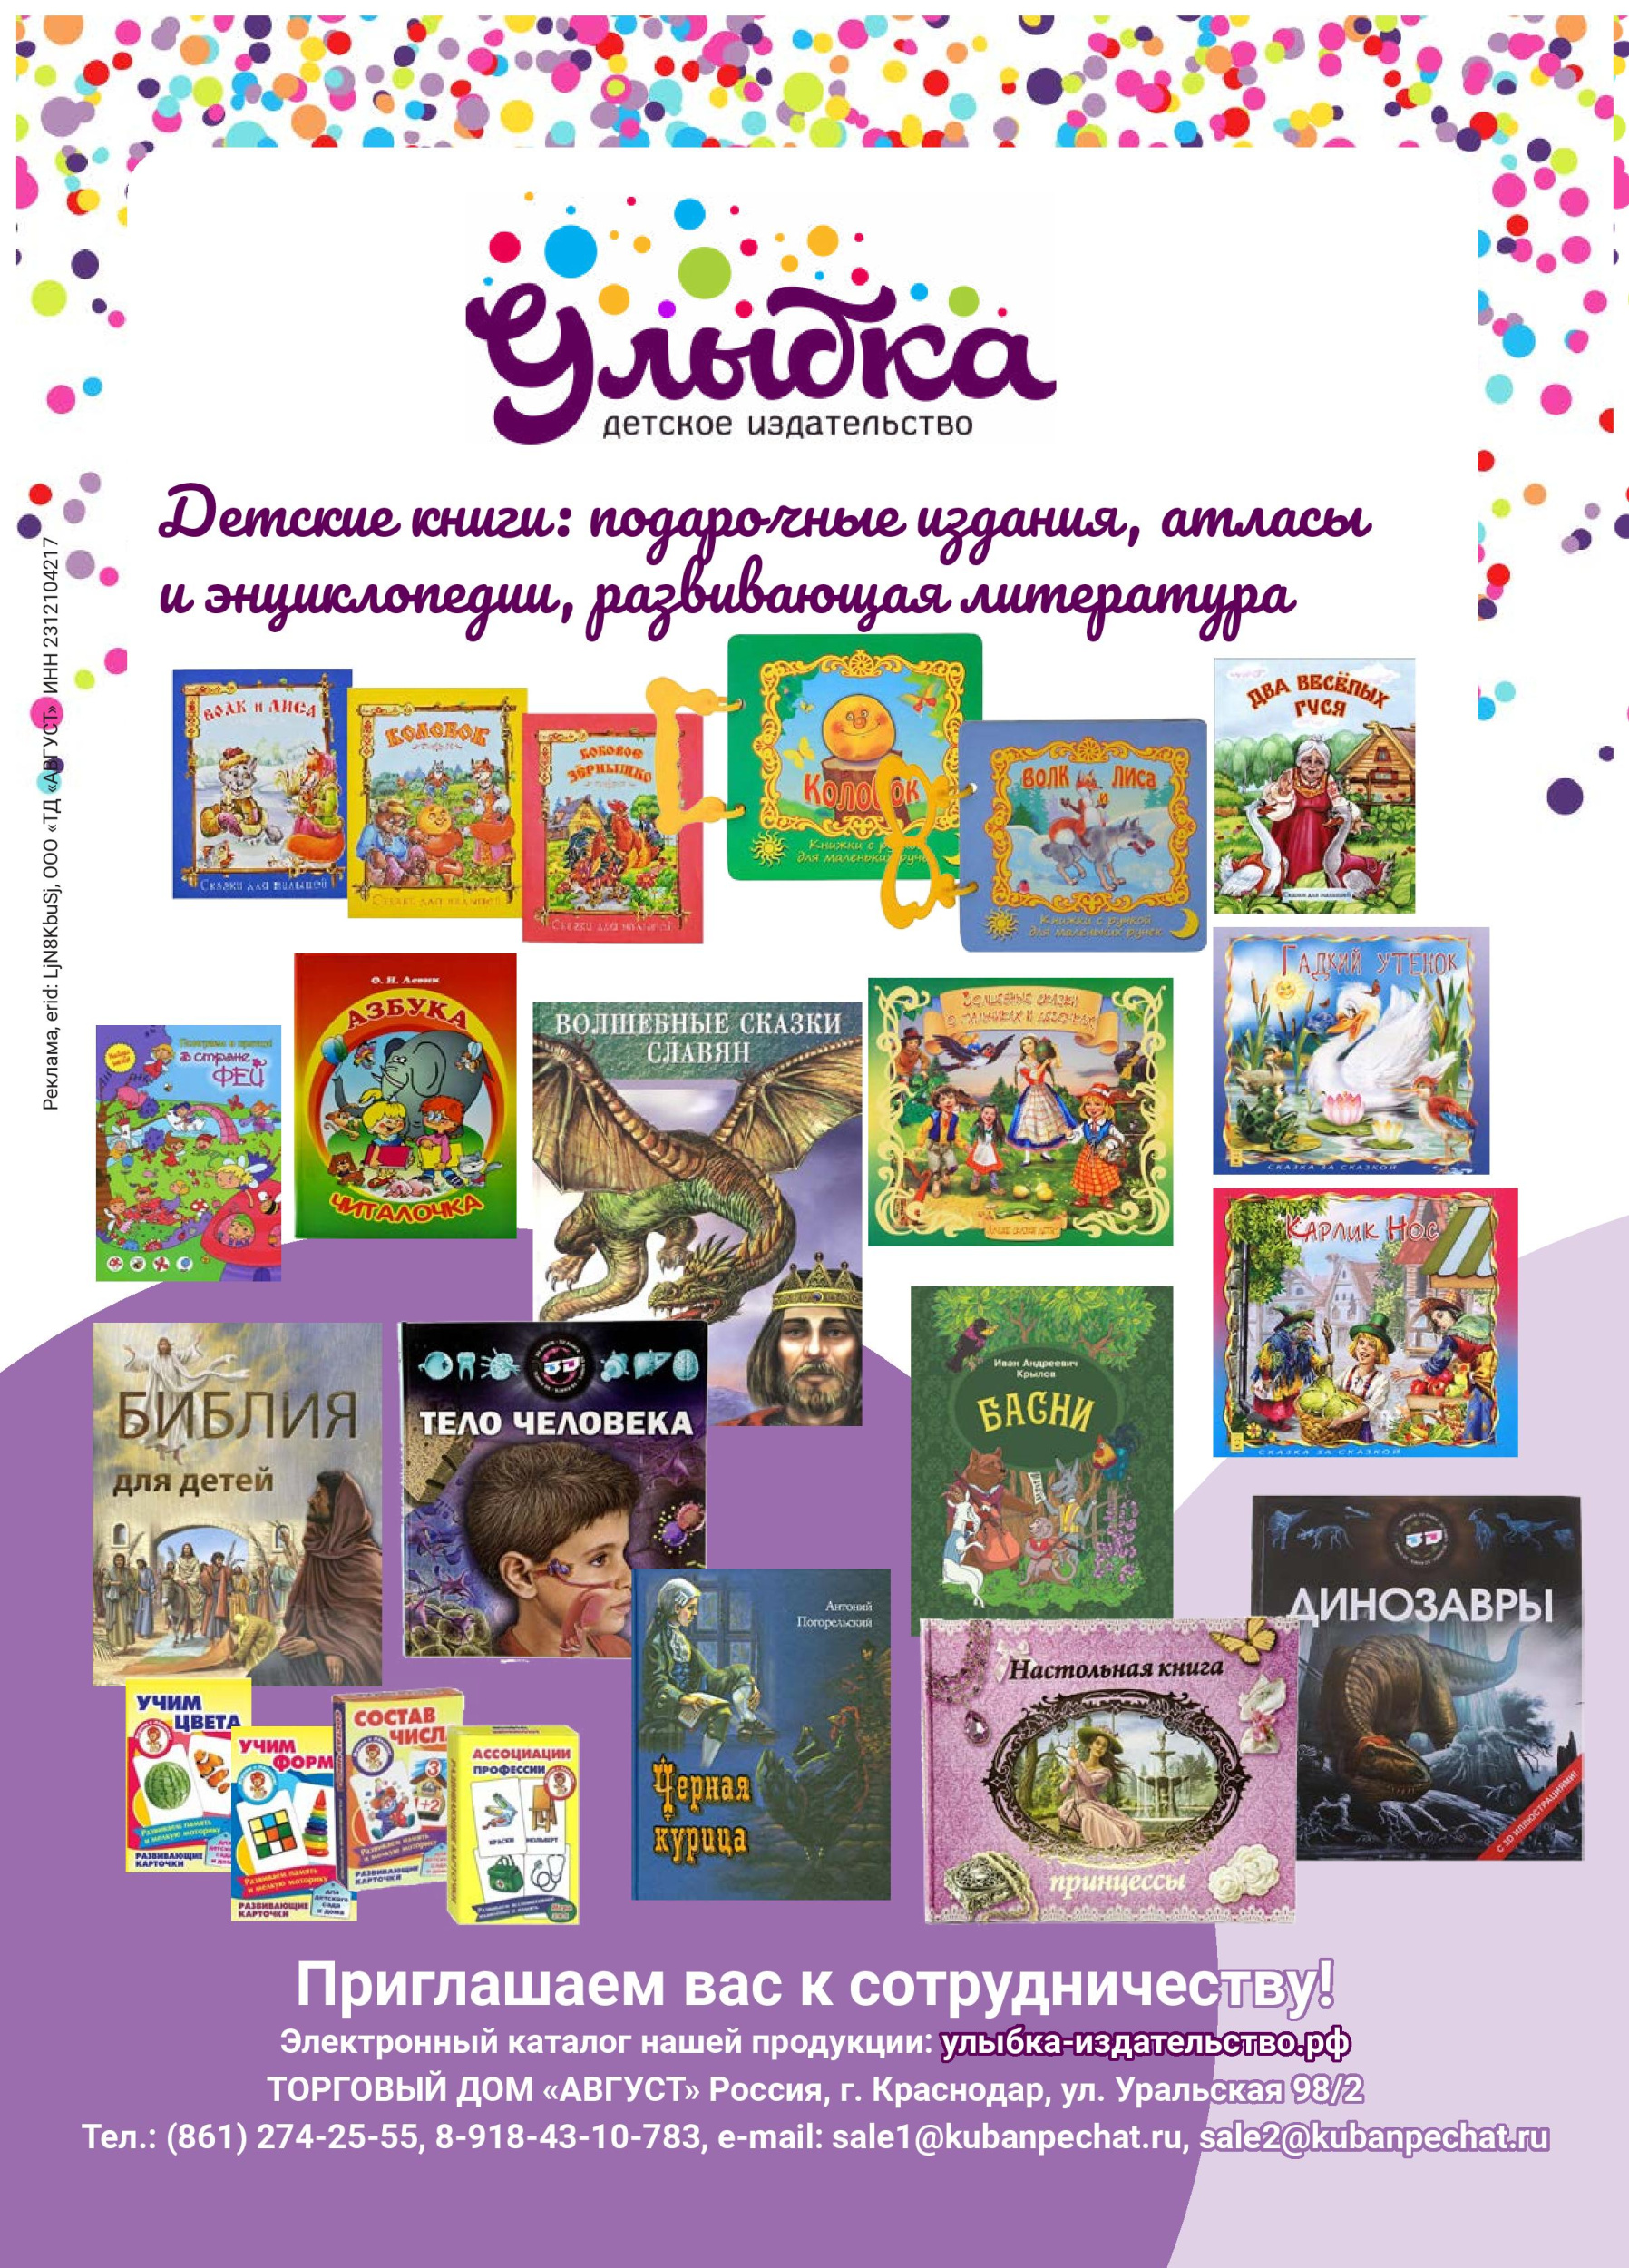 Книги и игрушки, Издательство "Улыбка"